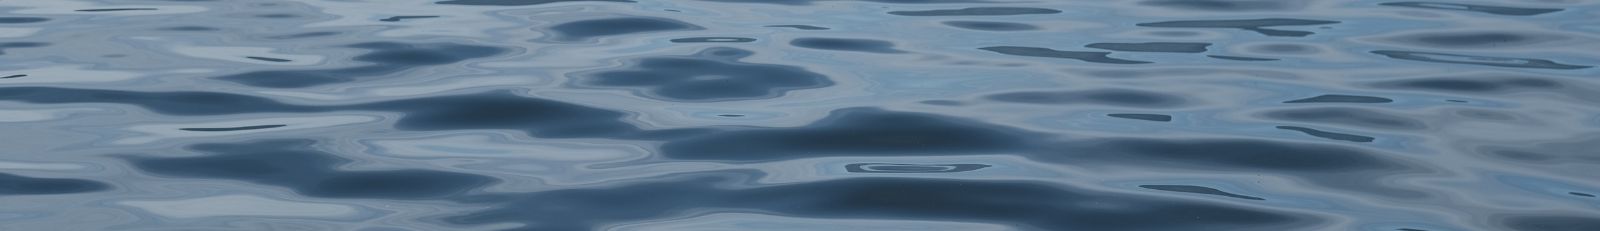 Image of surface of lake water.